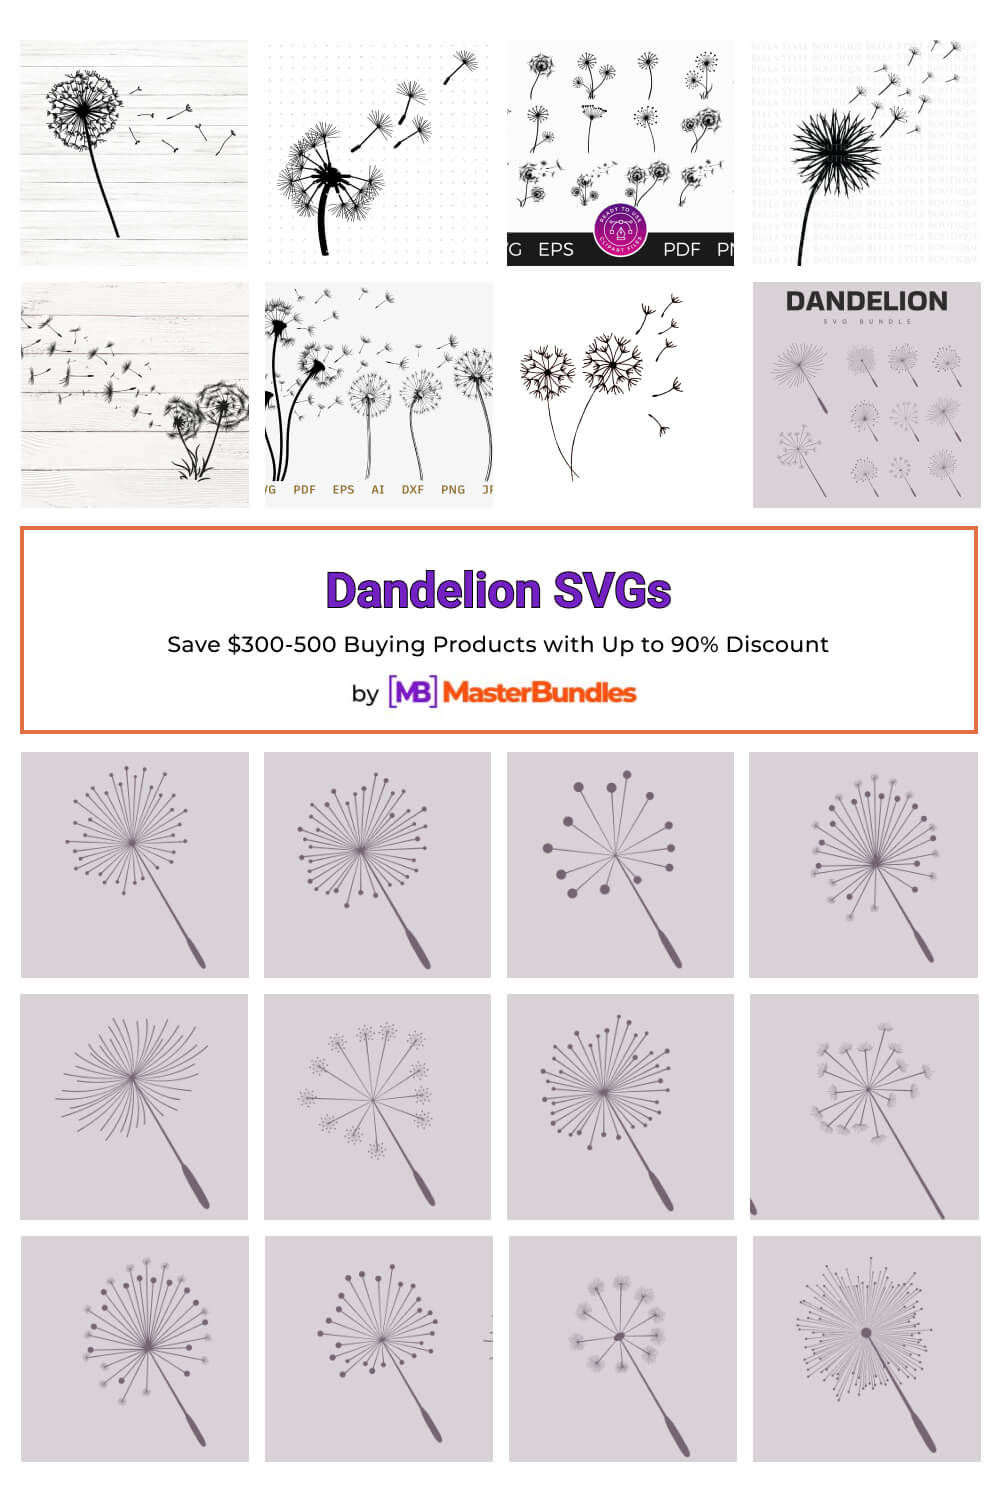 dandelion svgs pinterest image.